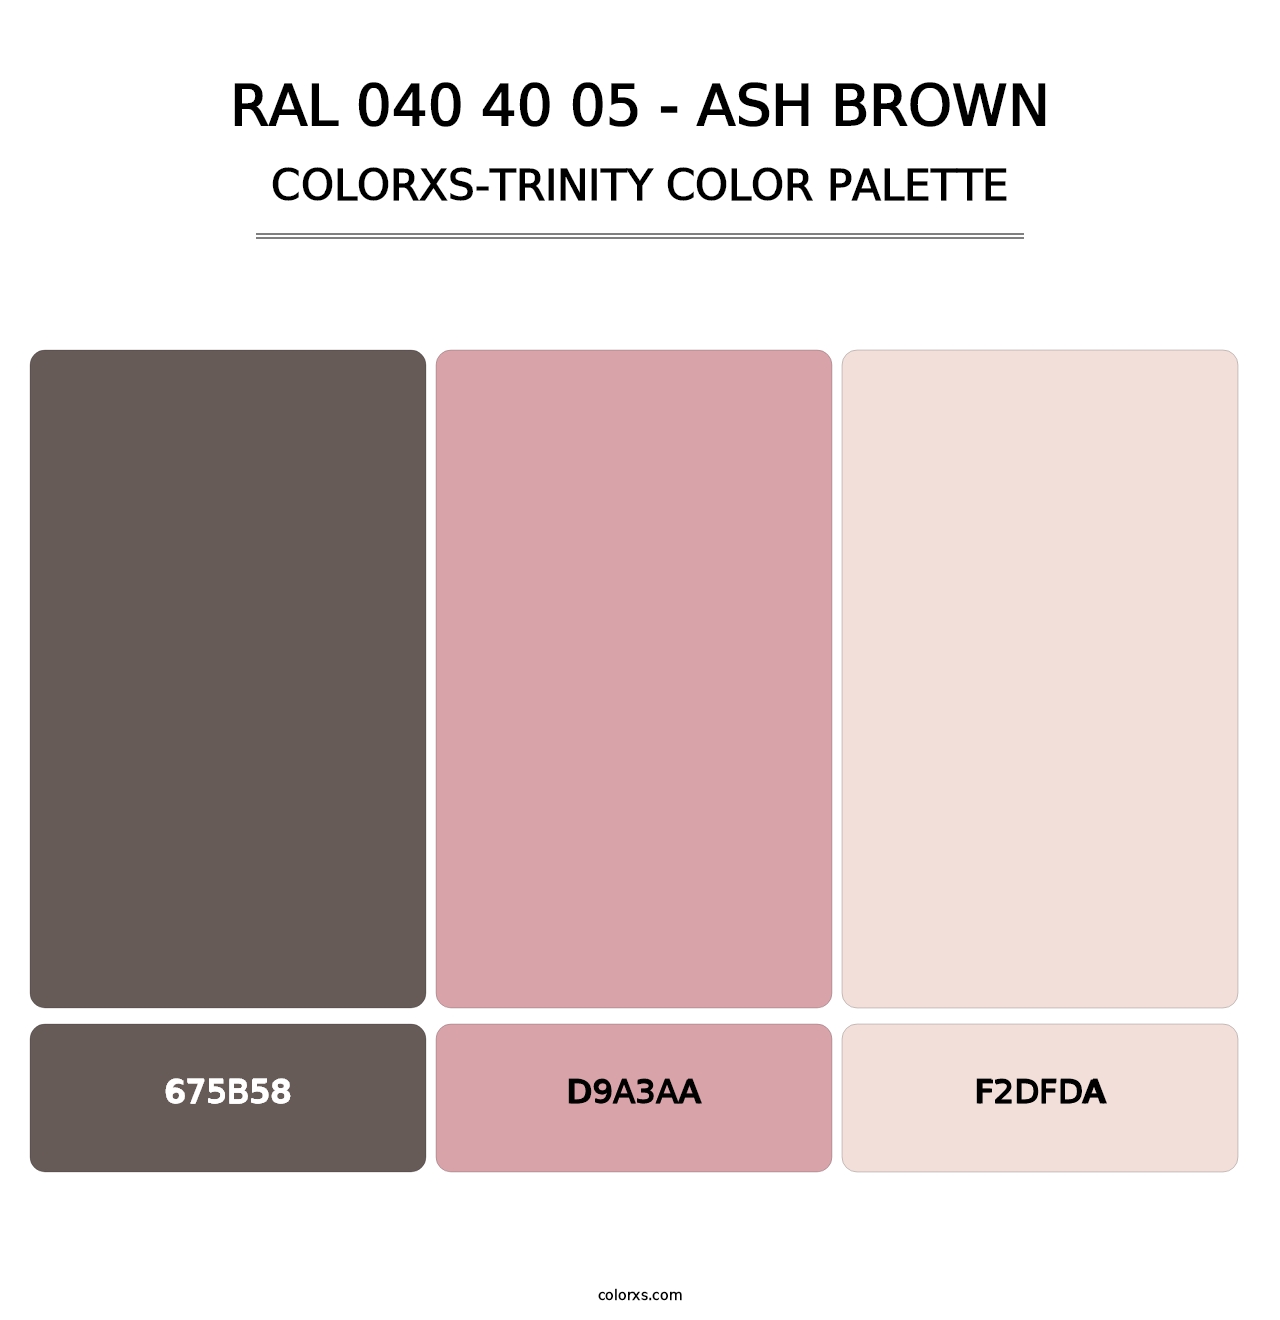 RAL 040 40 05 - Ash Brown - Colorxs Trinity Palette